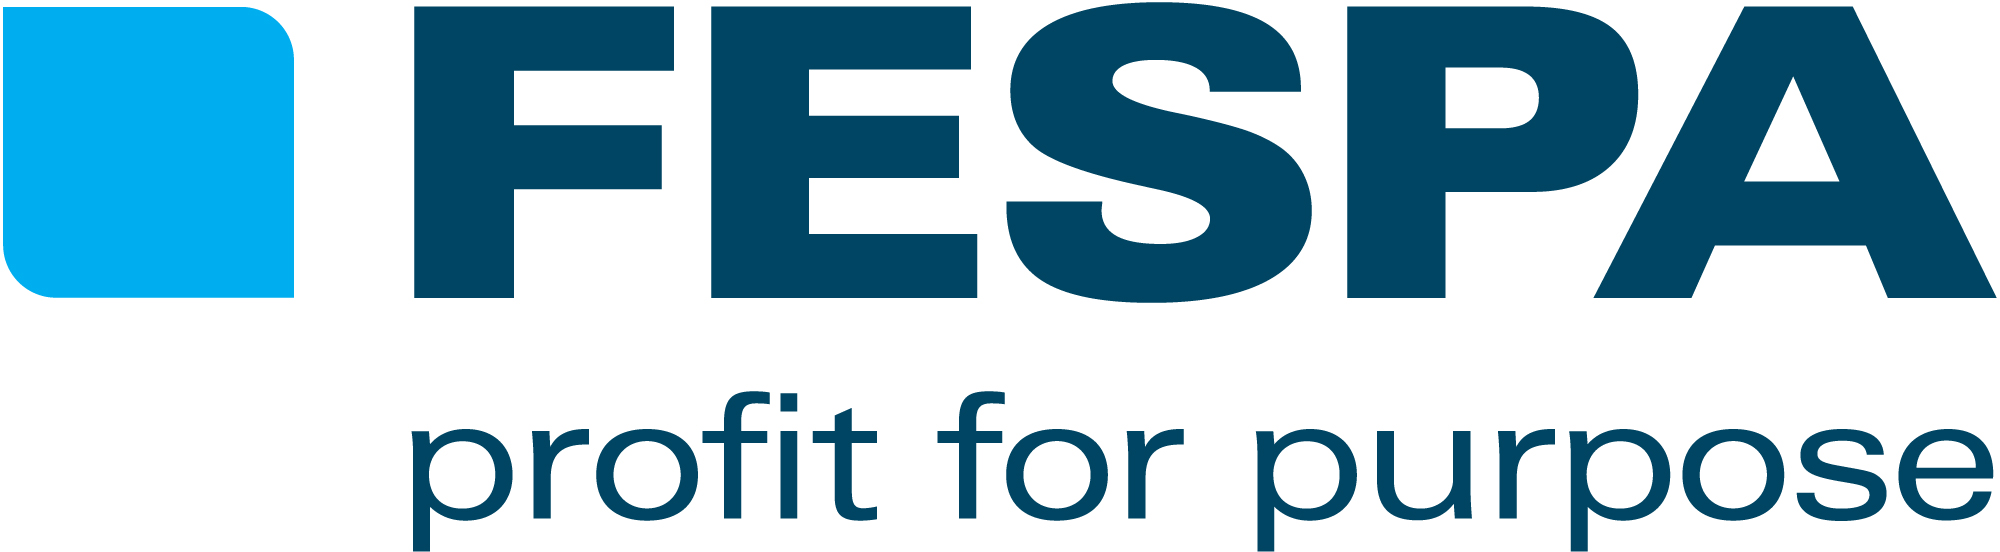 15816-FESPA-Profit-For-Purpose-Logo